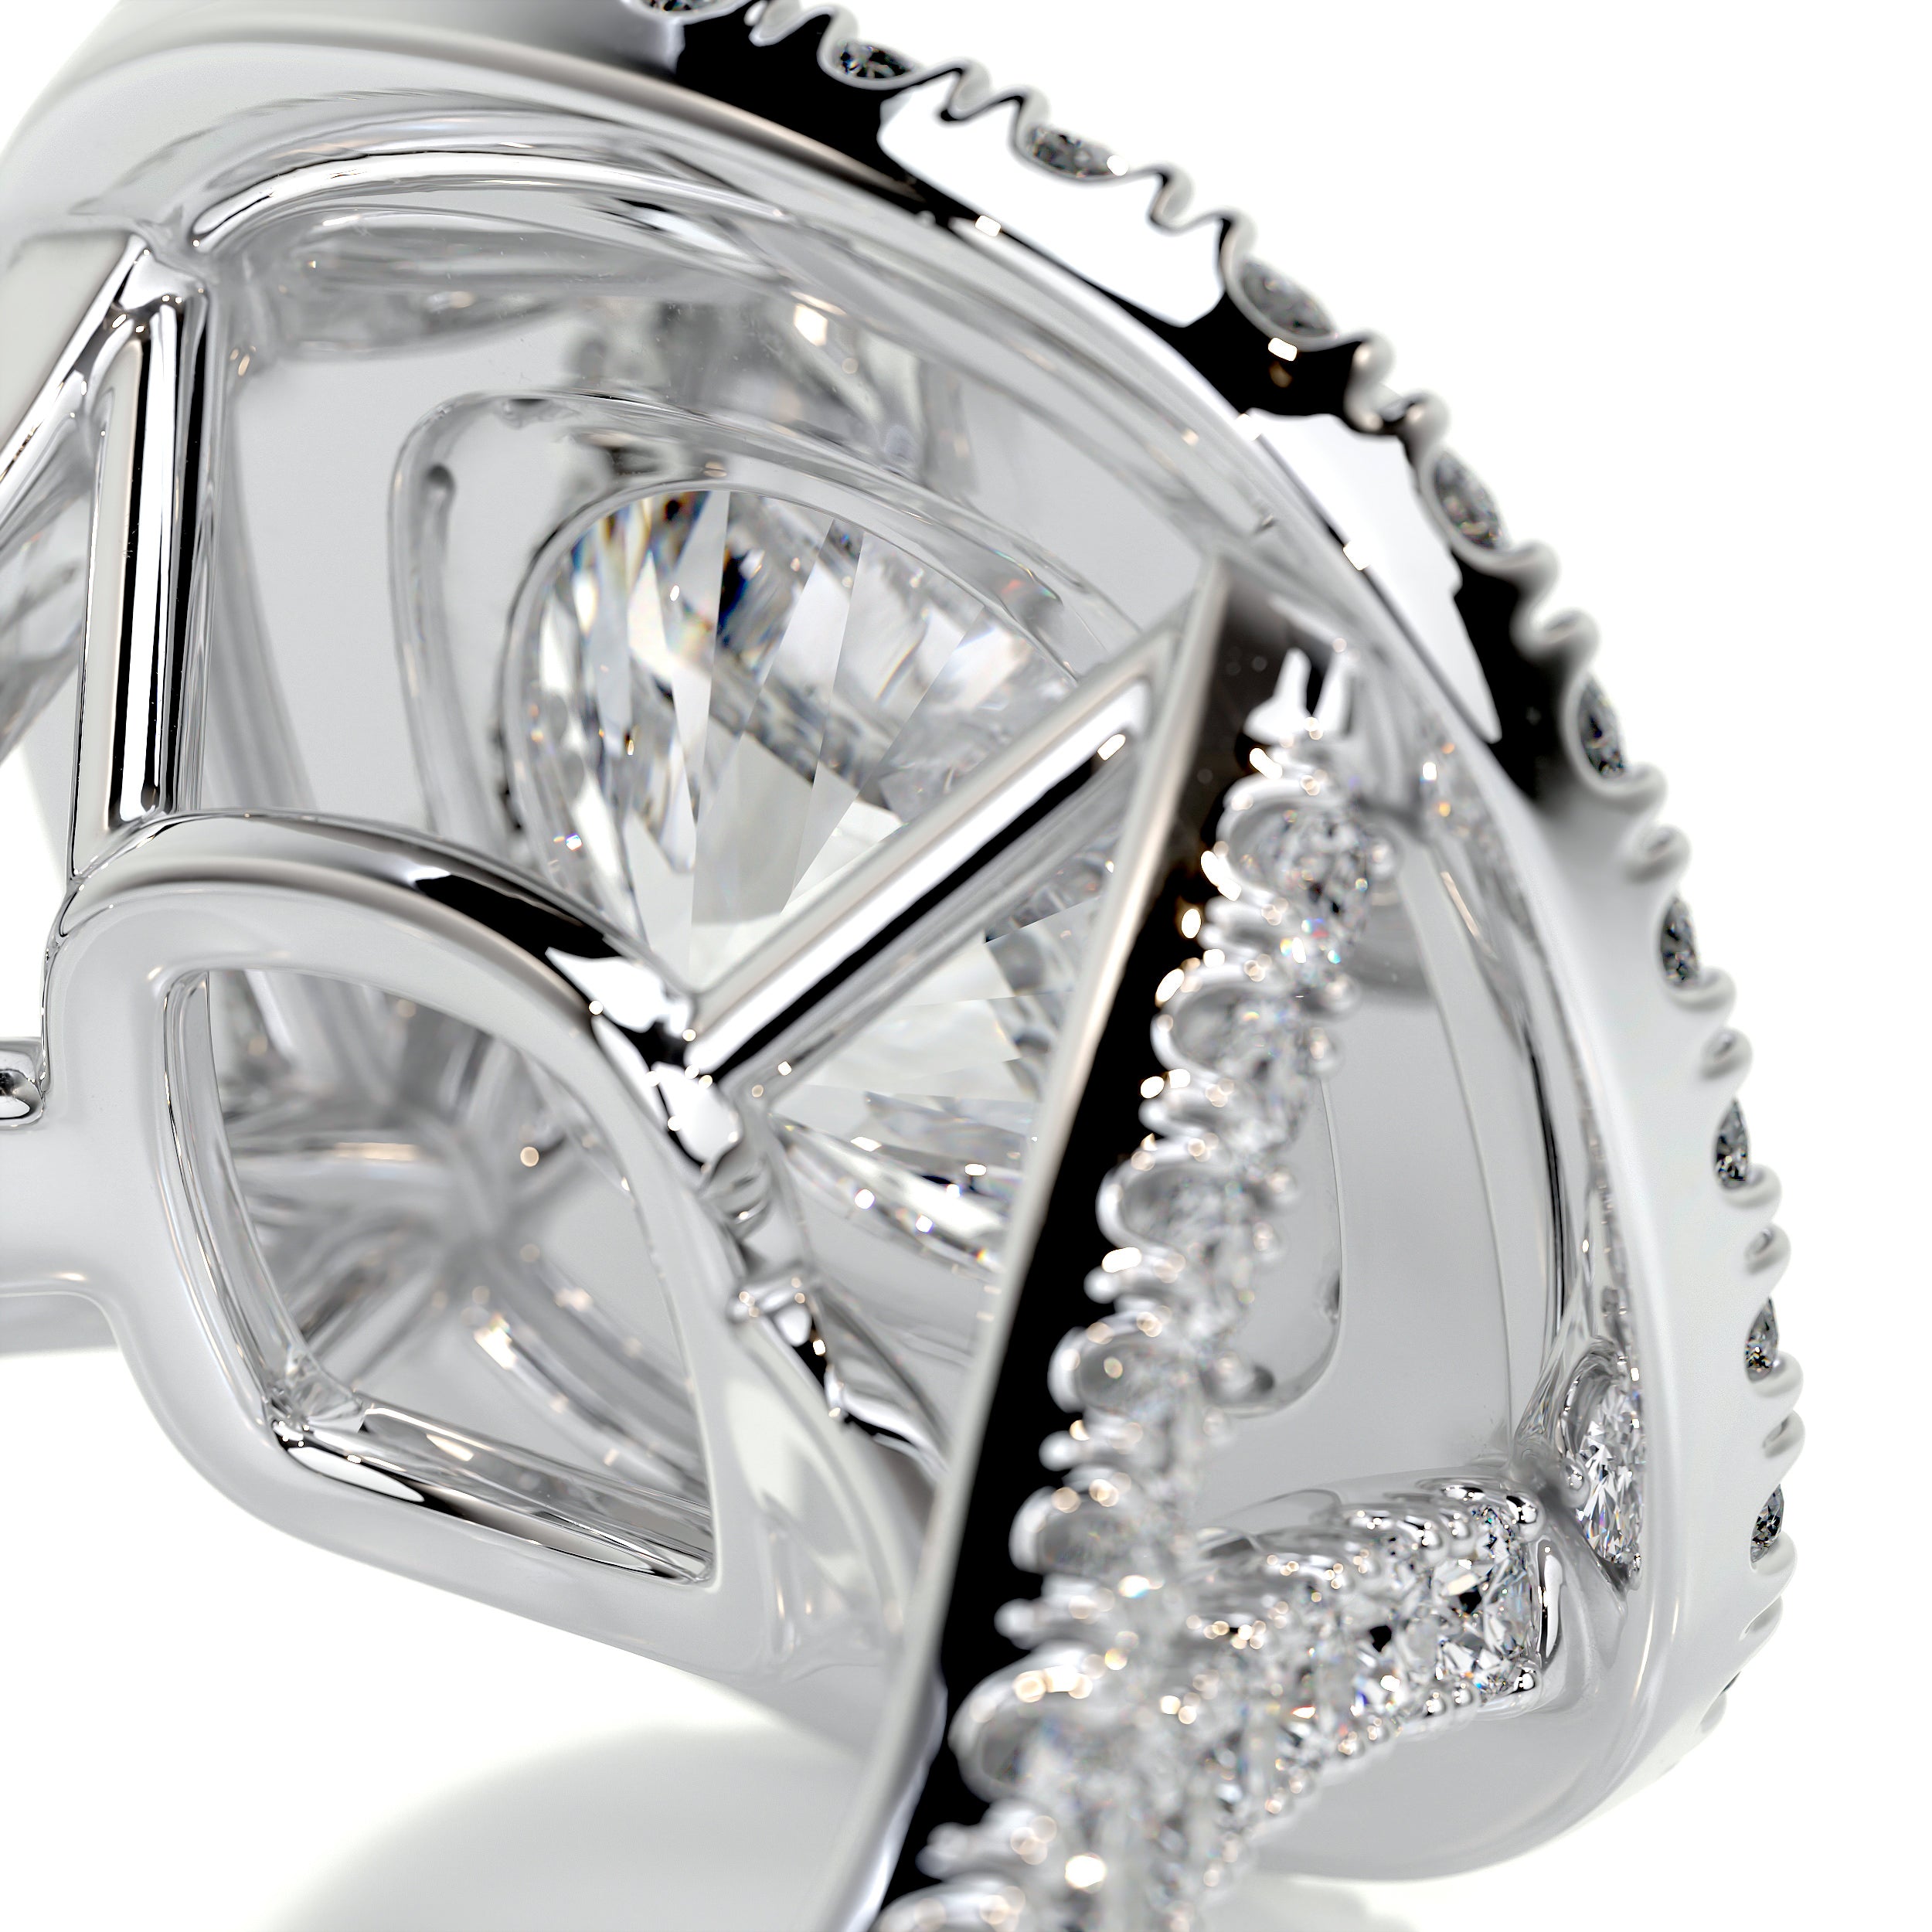 Angela Diamond Engagement Ring -14K White Gold